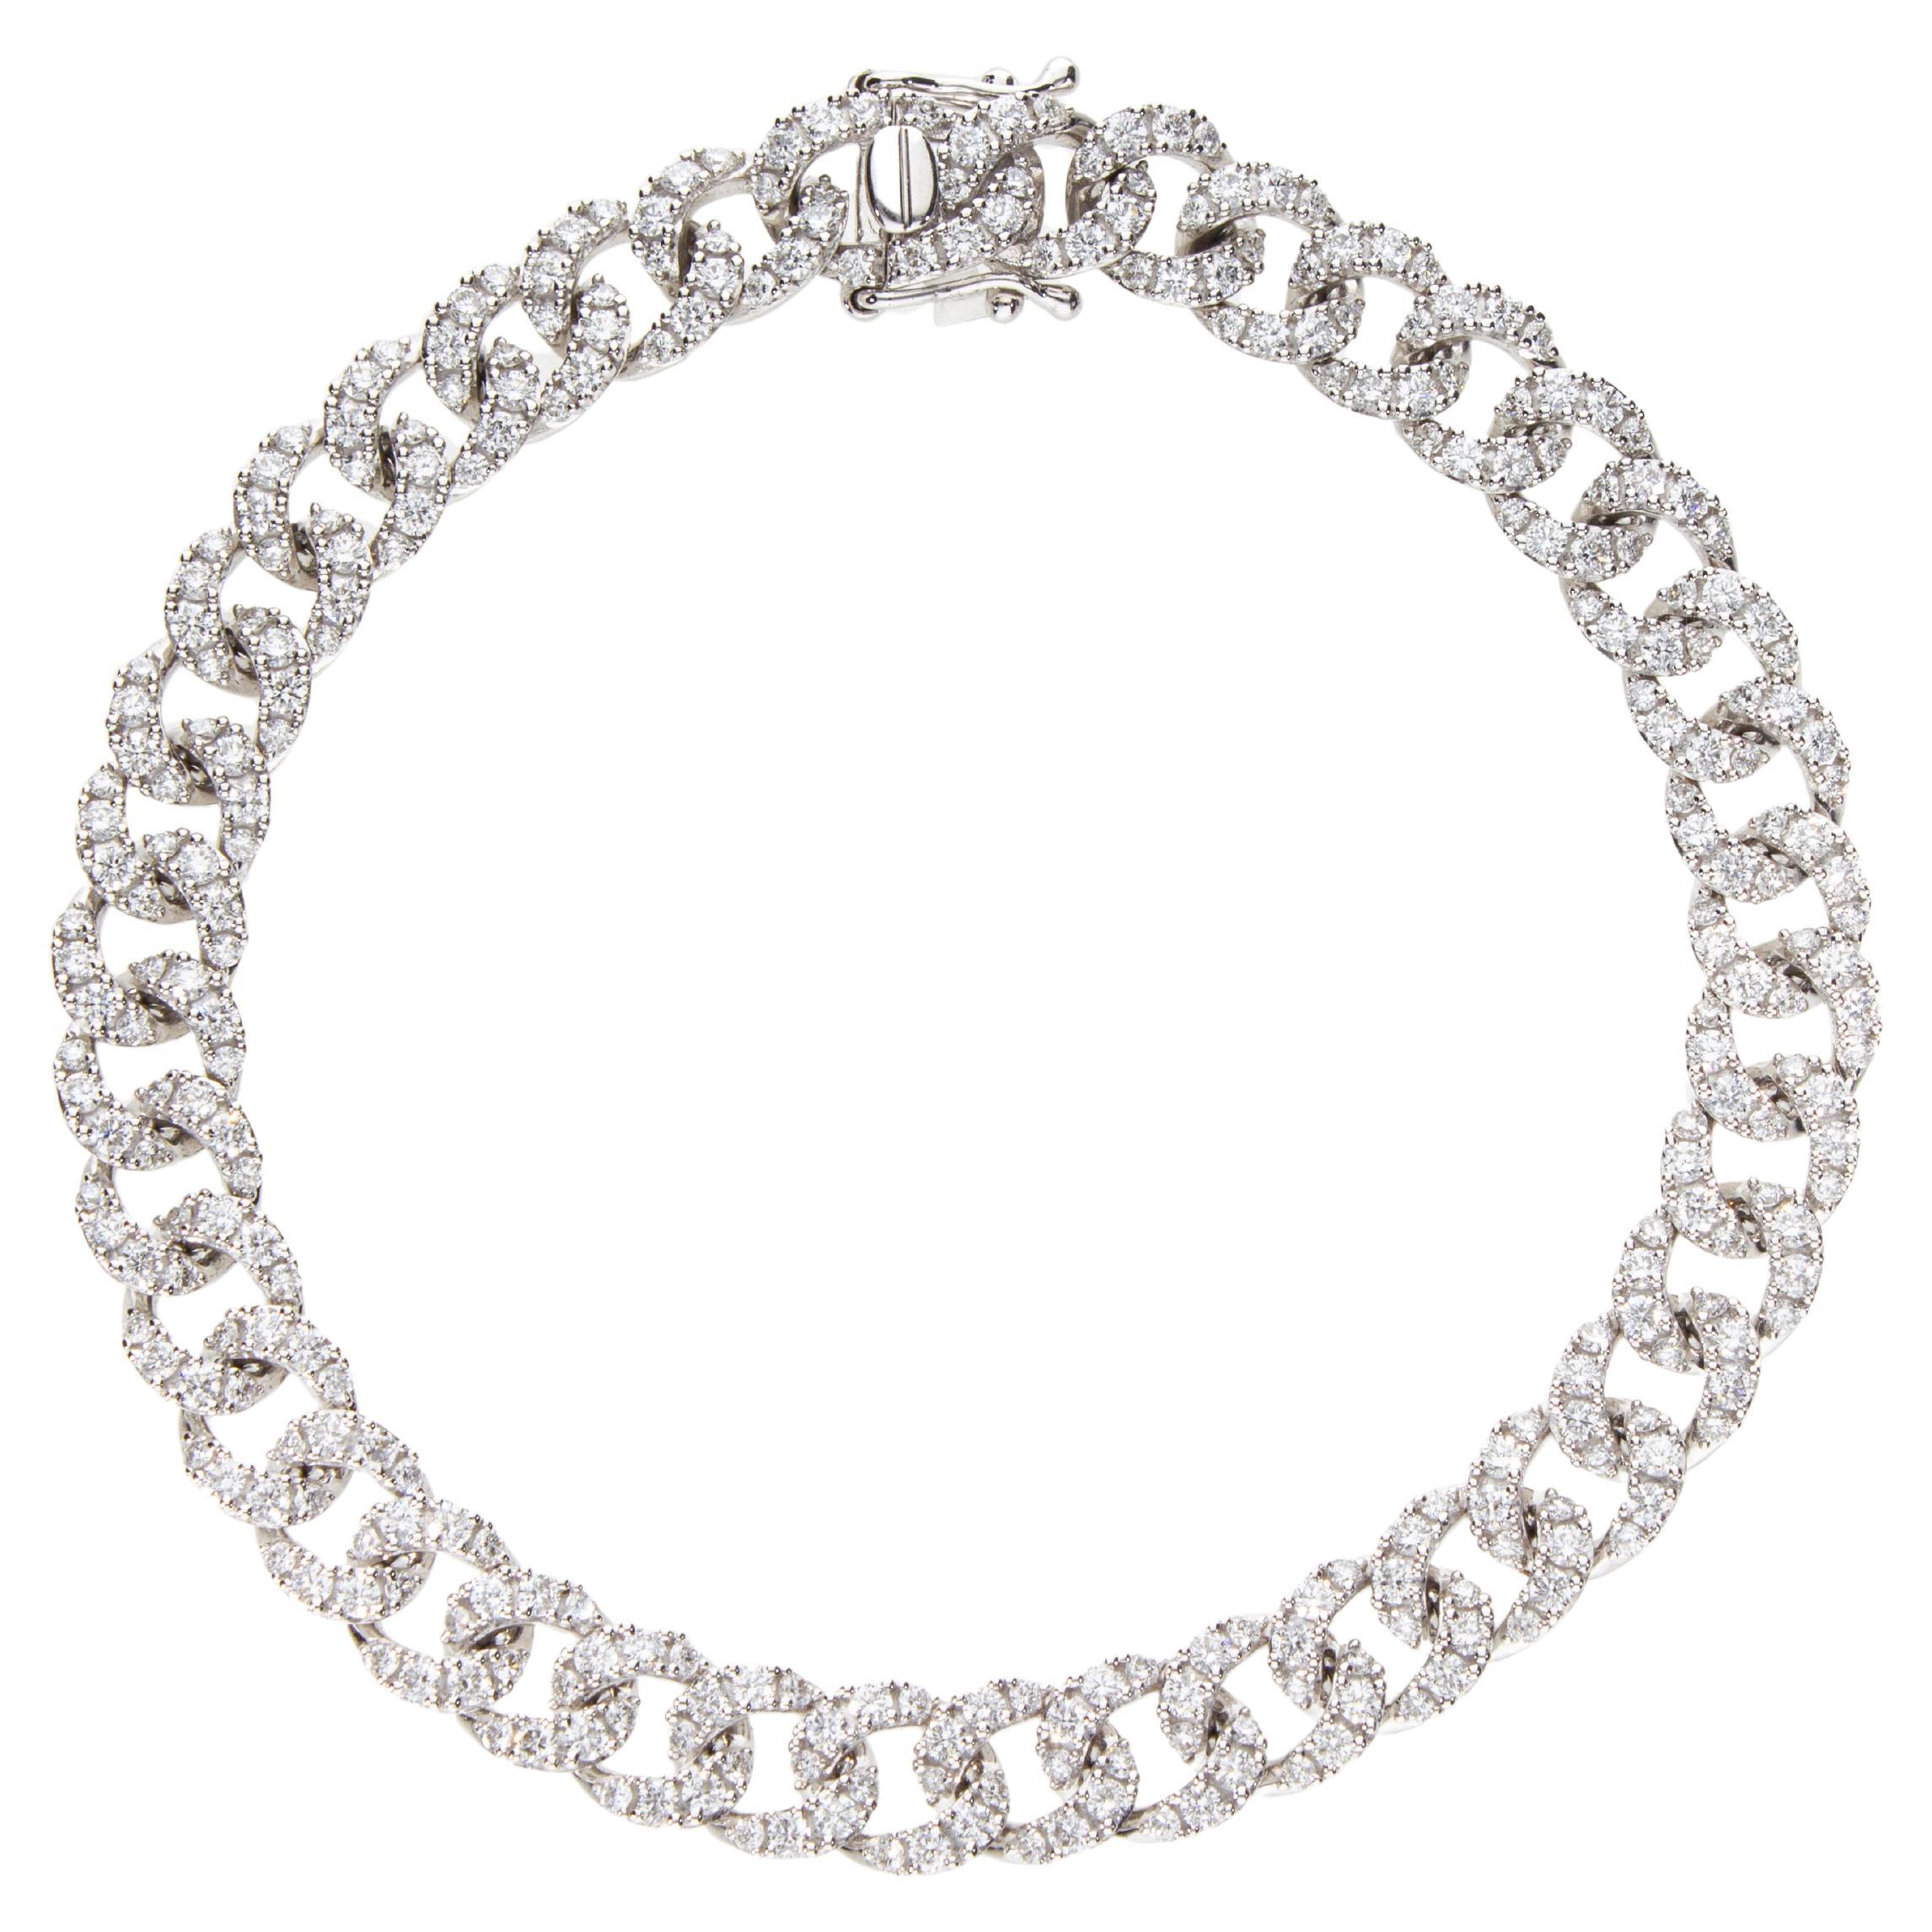 Groumette Bracelet with Ct 3.35 of Diamonds, 18 Kt White Gold